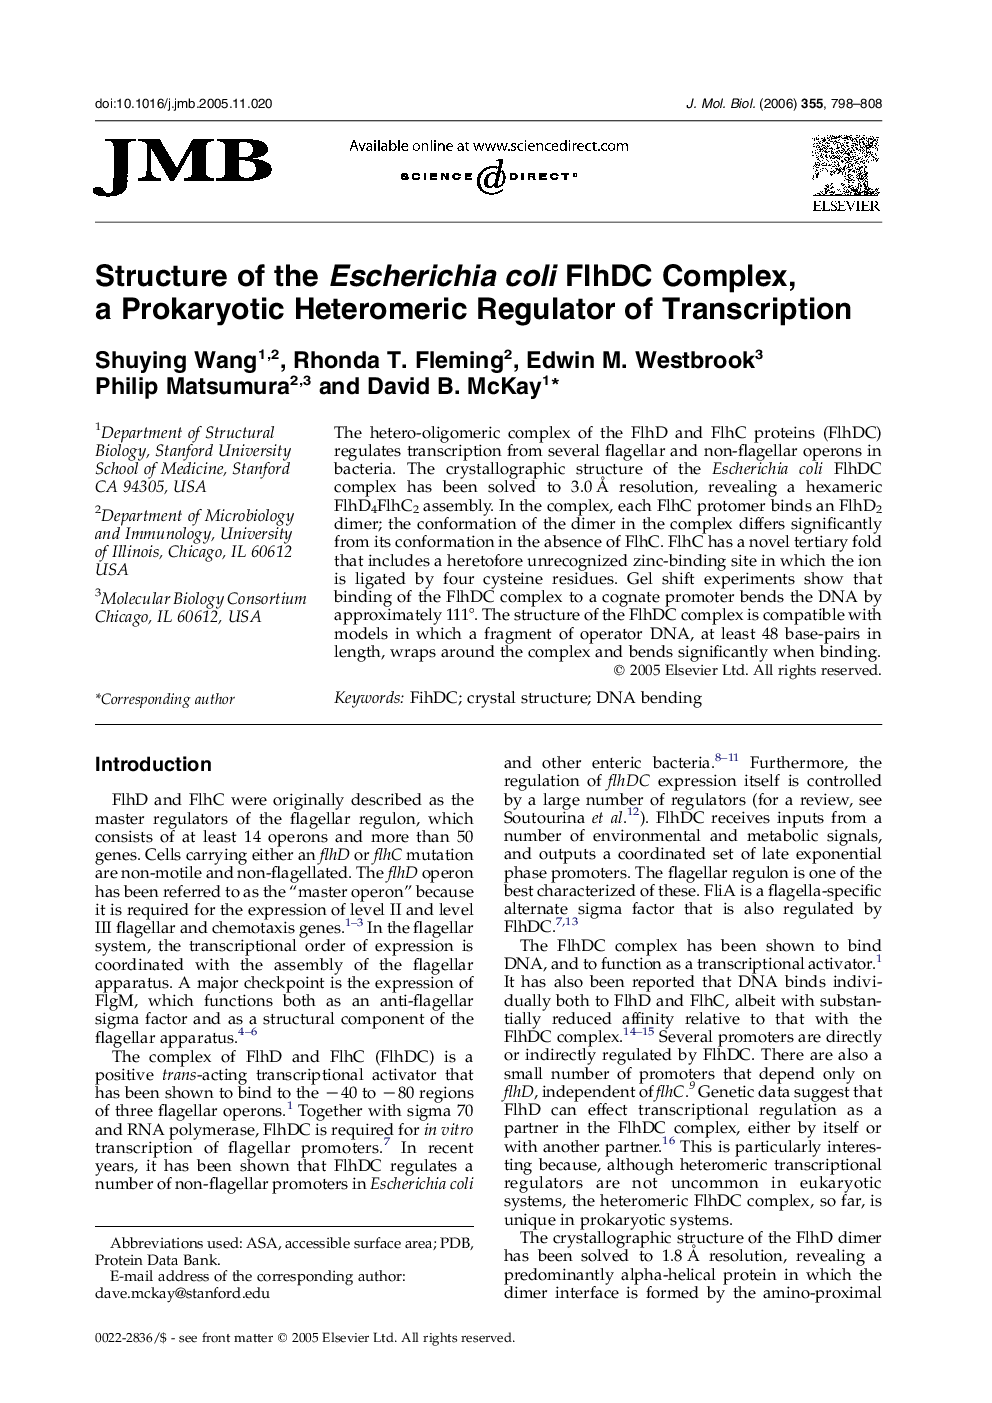 Structure of the Escherichia coli FlhDC Complex, a Prokaryotic Heteromeric Regulator of Transcription